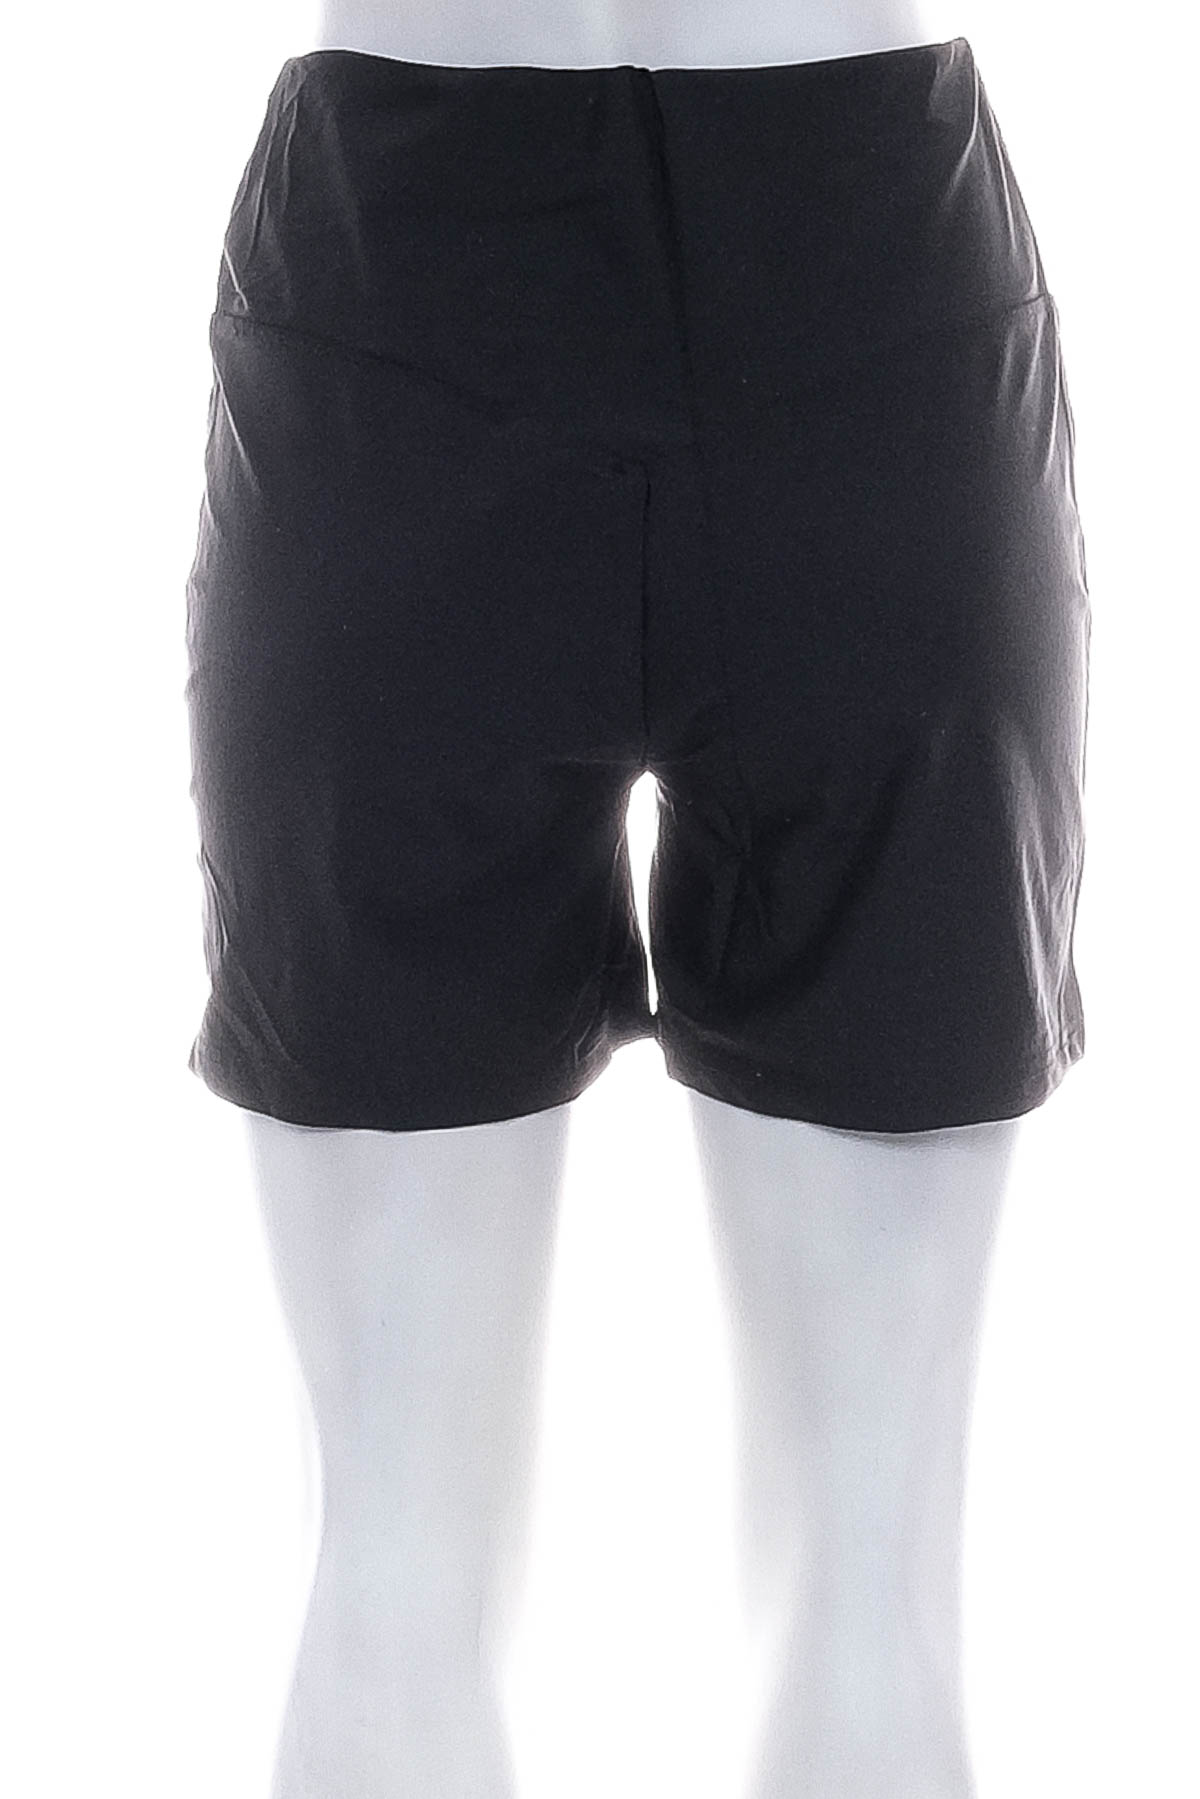 Female shorts - Asos - 0